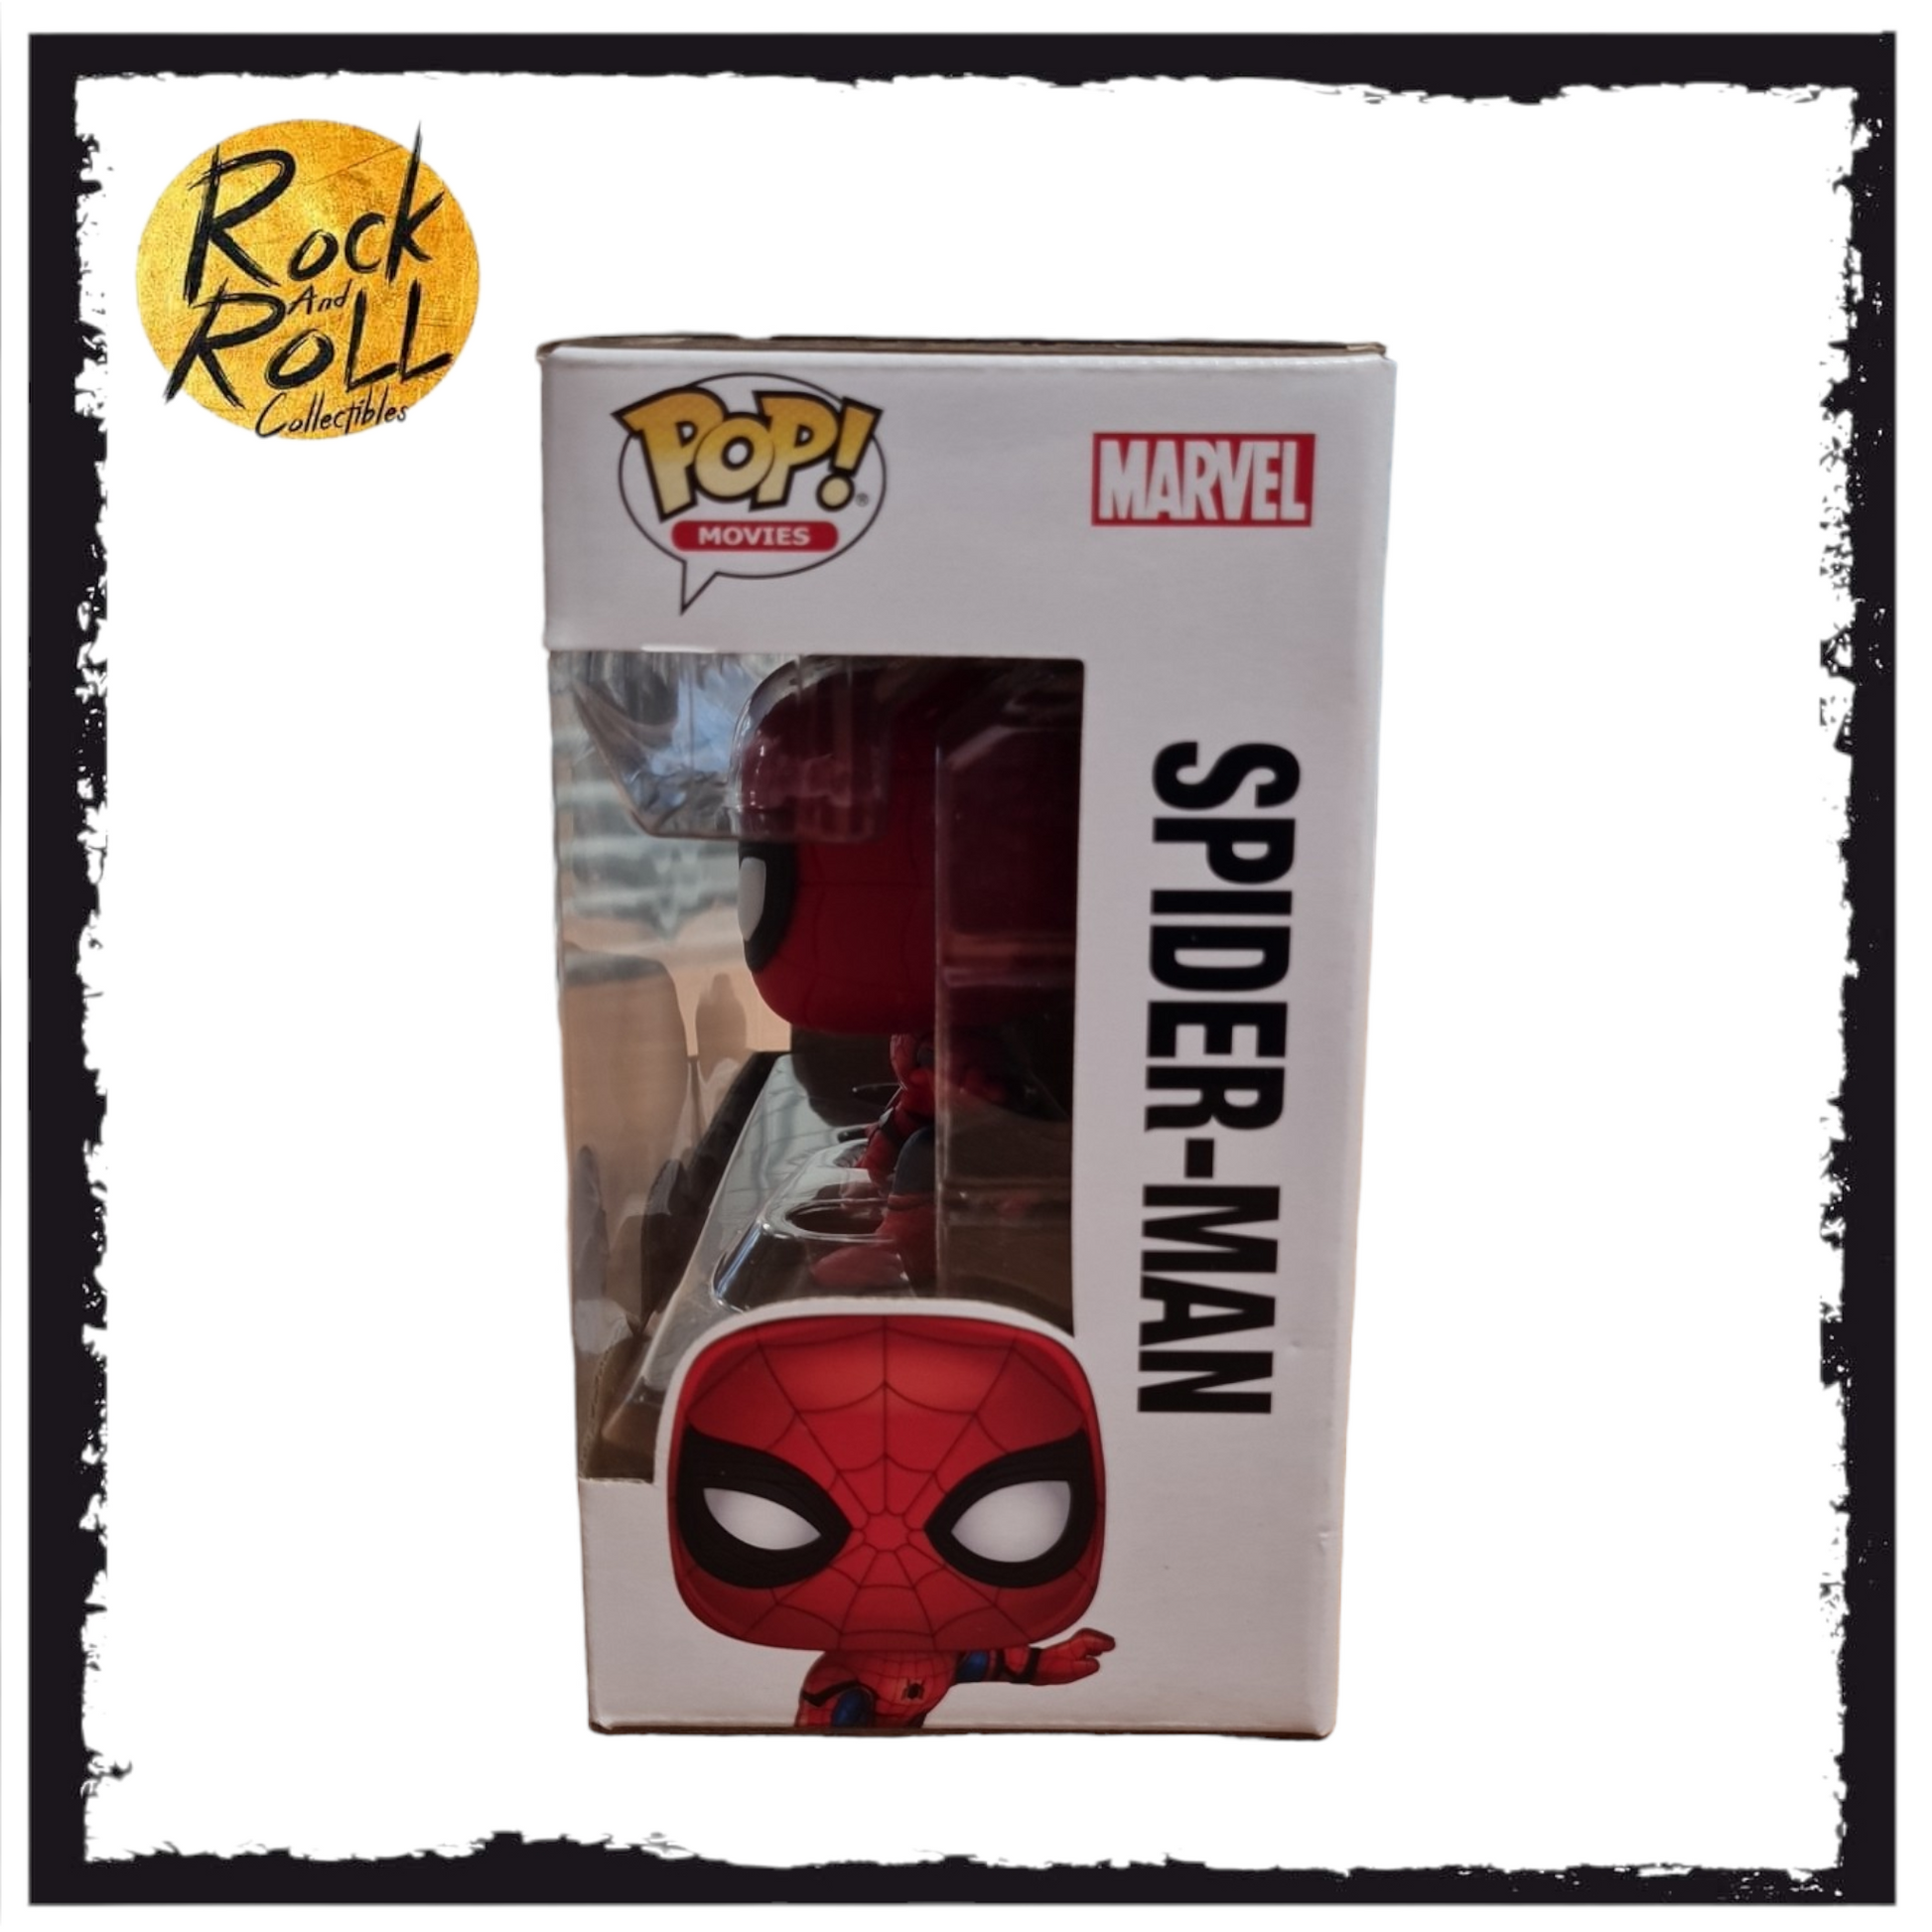 Iron Man / Spider-Man 2 Pack Funko Pop! - Spider-Man Homecoming - Cond